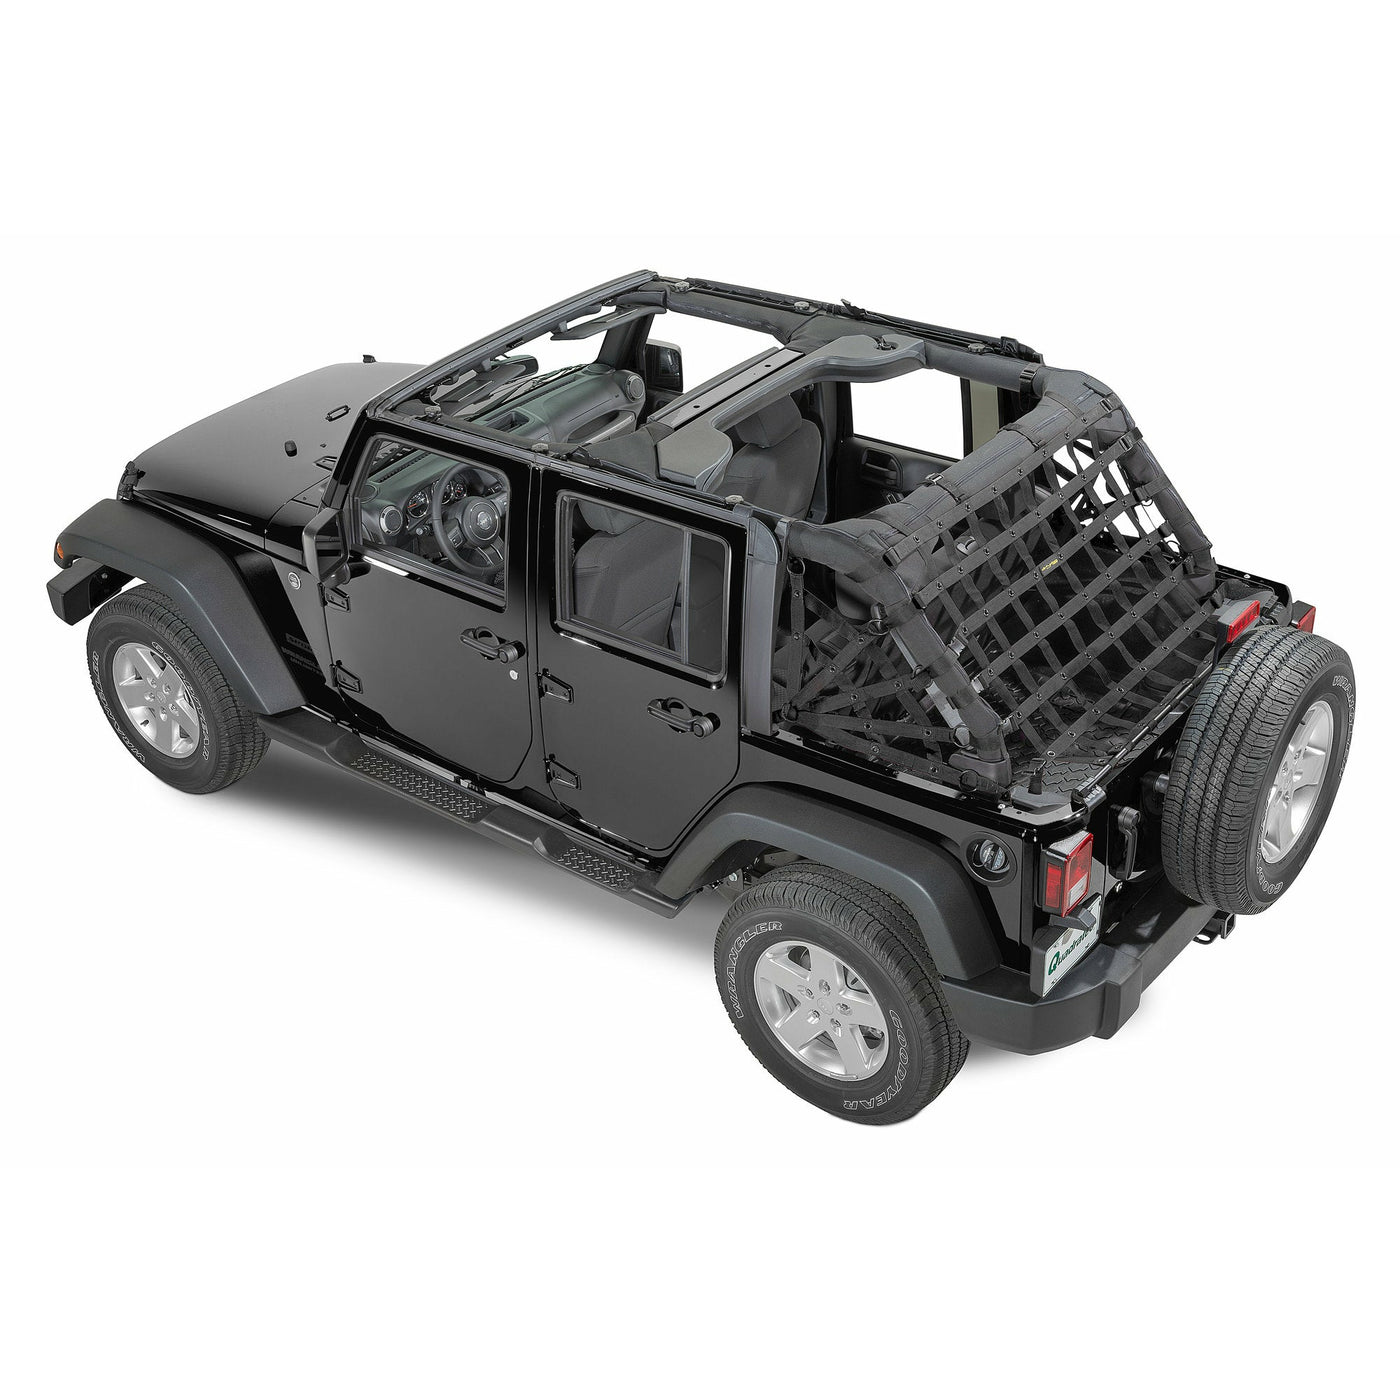 Dirtydog 4X4 Rear Spider Netting for 07-18 Jeep Wrangler Unlimited JK 4 Door